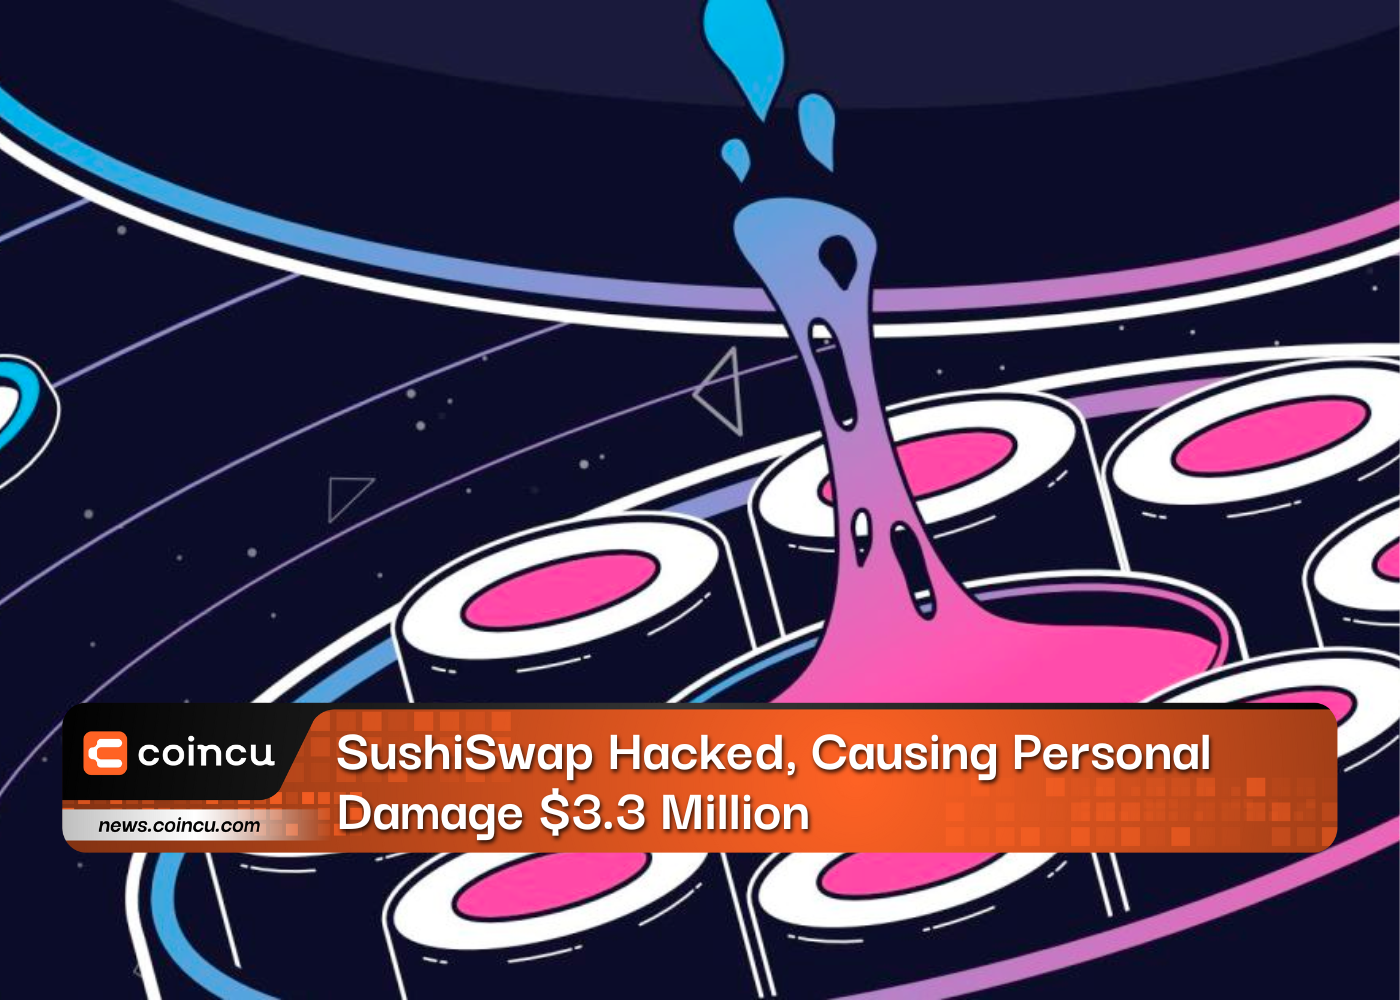 SushiSwap Hacked, Causing Personal Damage $3.3 Million